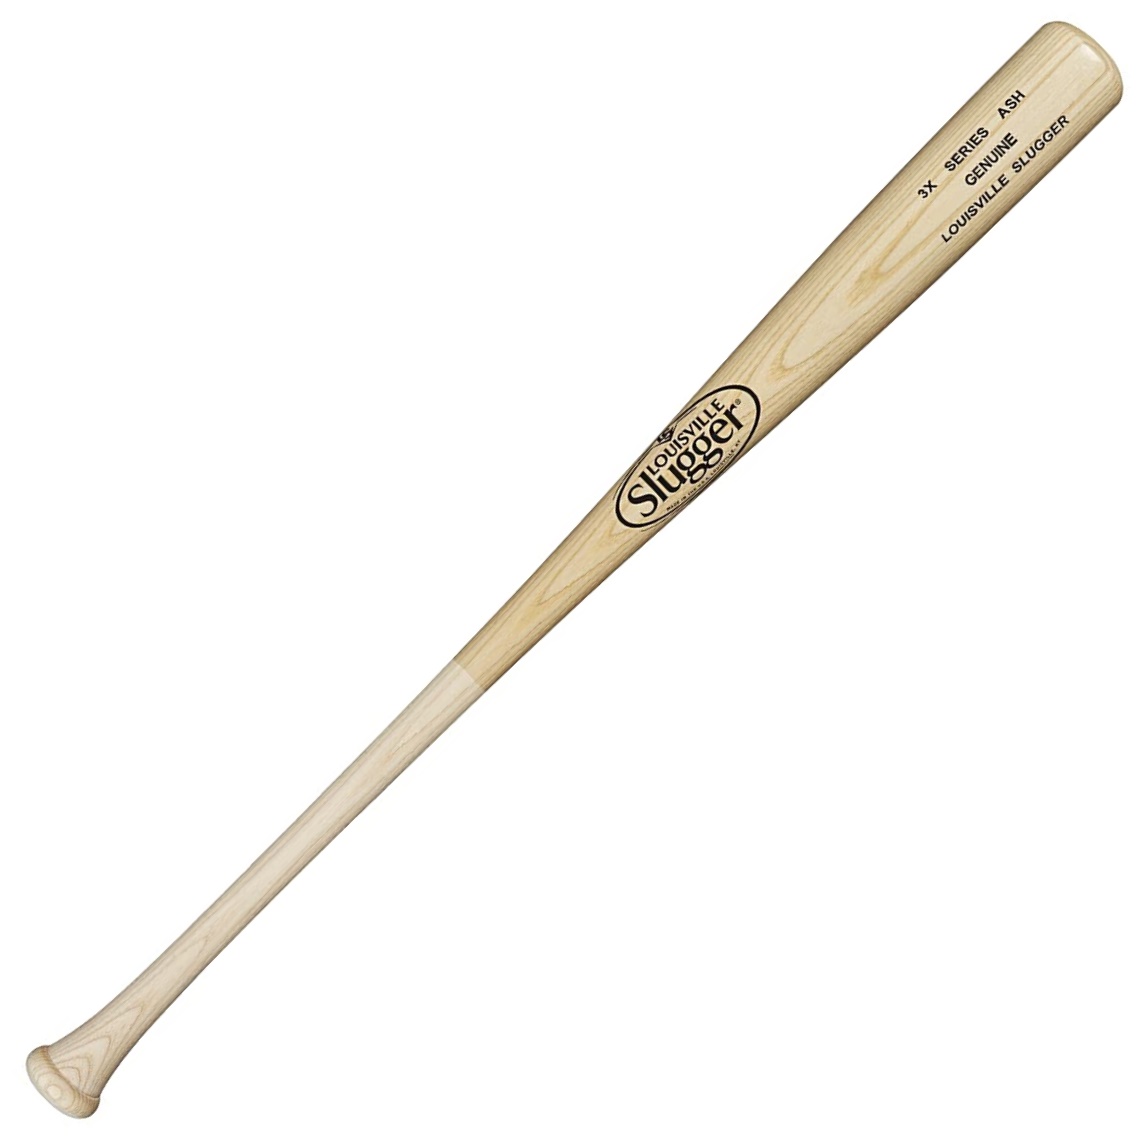 louisville-slugger-genuine-series-3x-ash-mixed-wood-baseball-bat-33-inch-natural LW3AMIXB1633 Louisville 887768508746 Louisville Slugger Genuine S3X Mixed Ash Wood Baseball Bat Louisville Sluggers